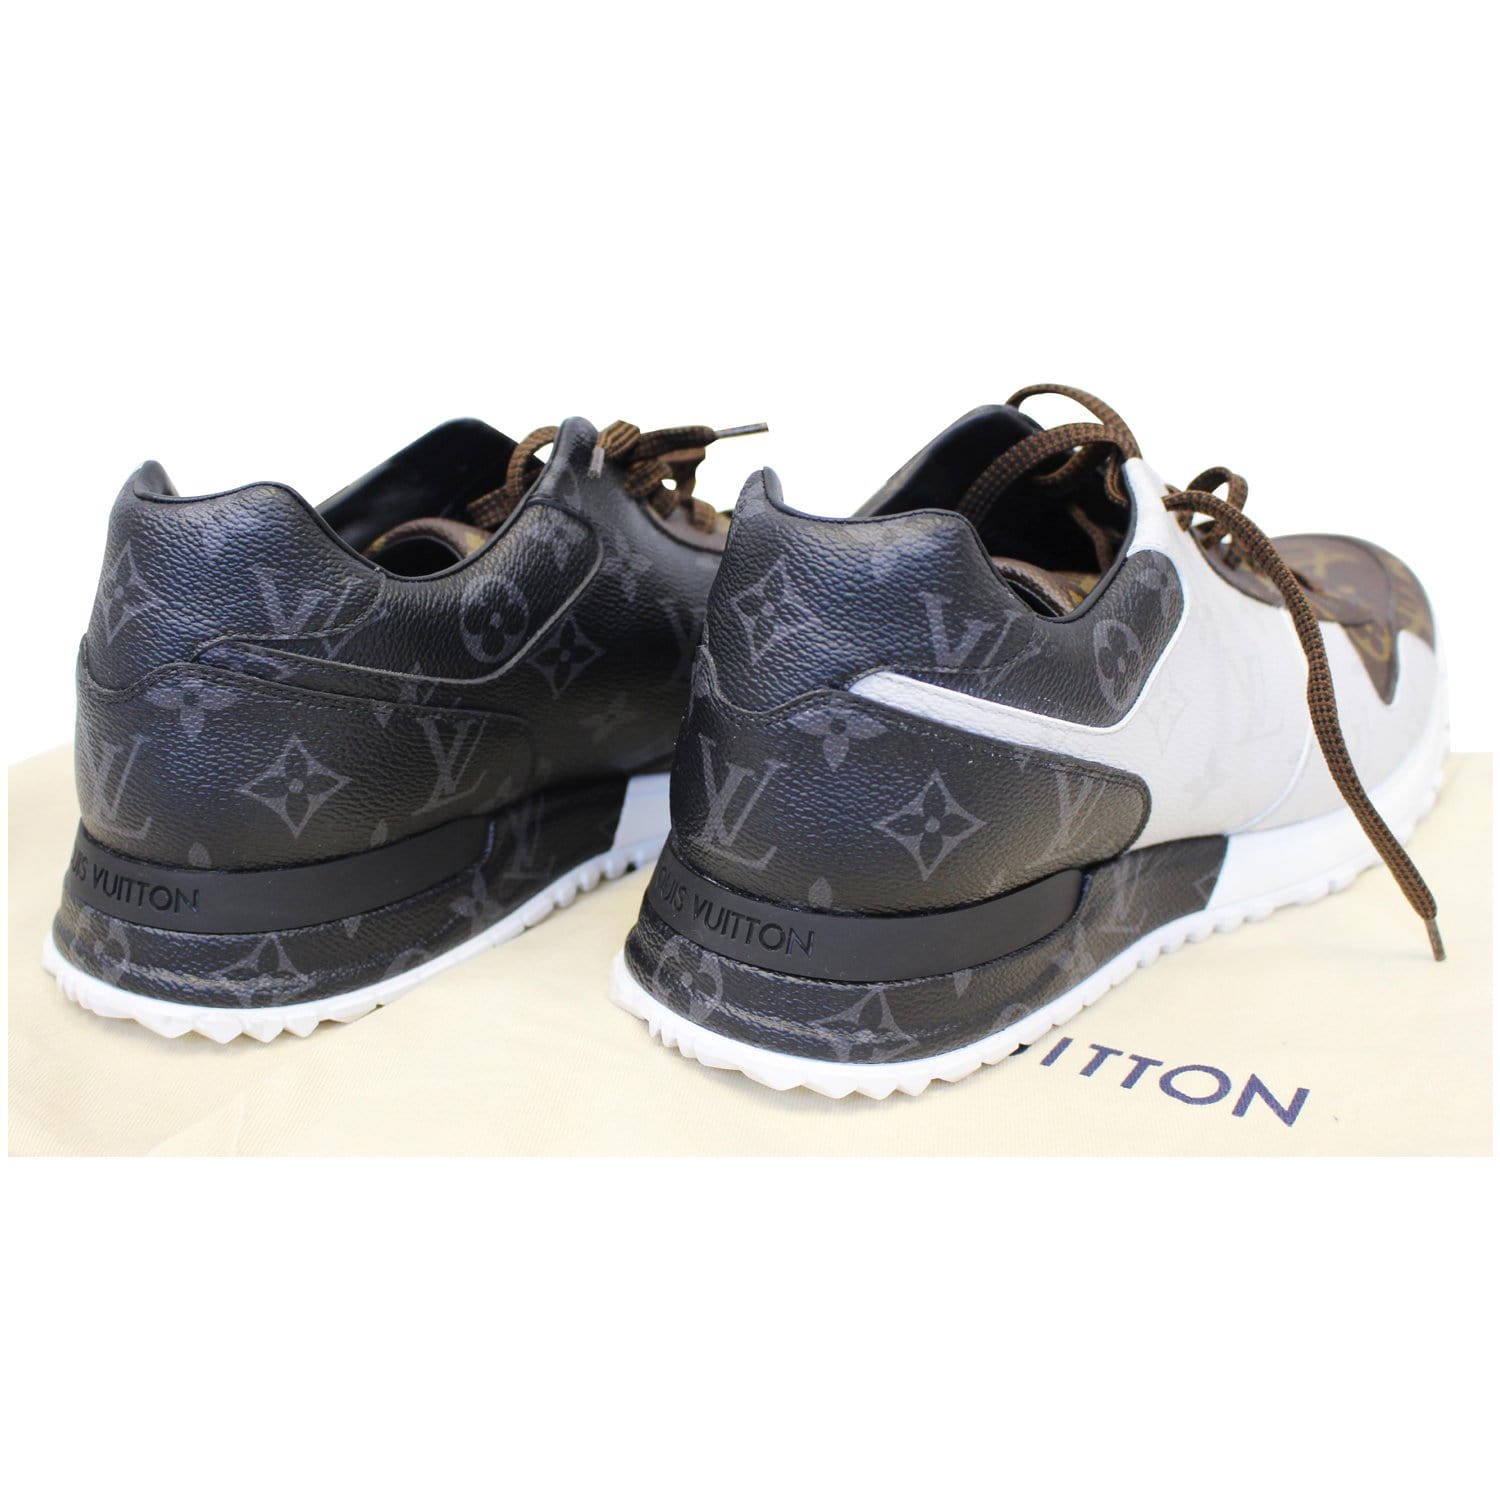 Louis Vuitton, Shoes, Lv Run Away Sneaker